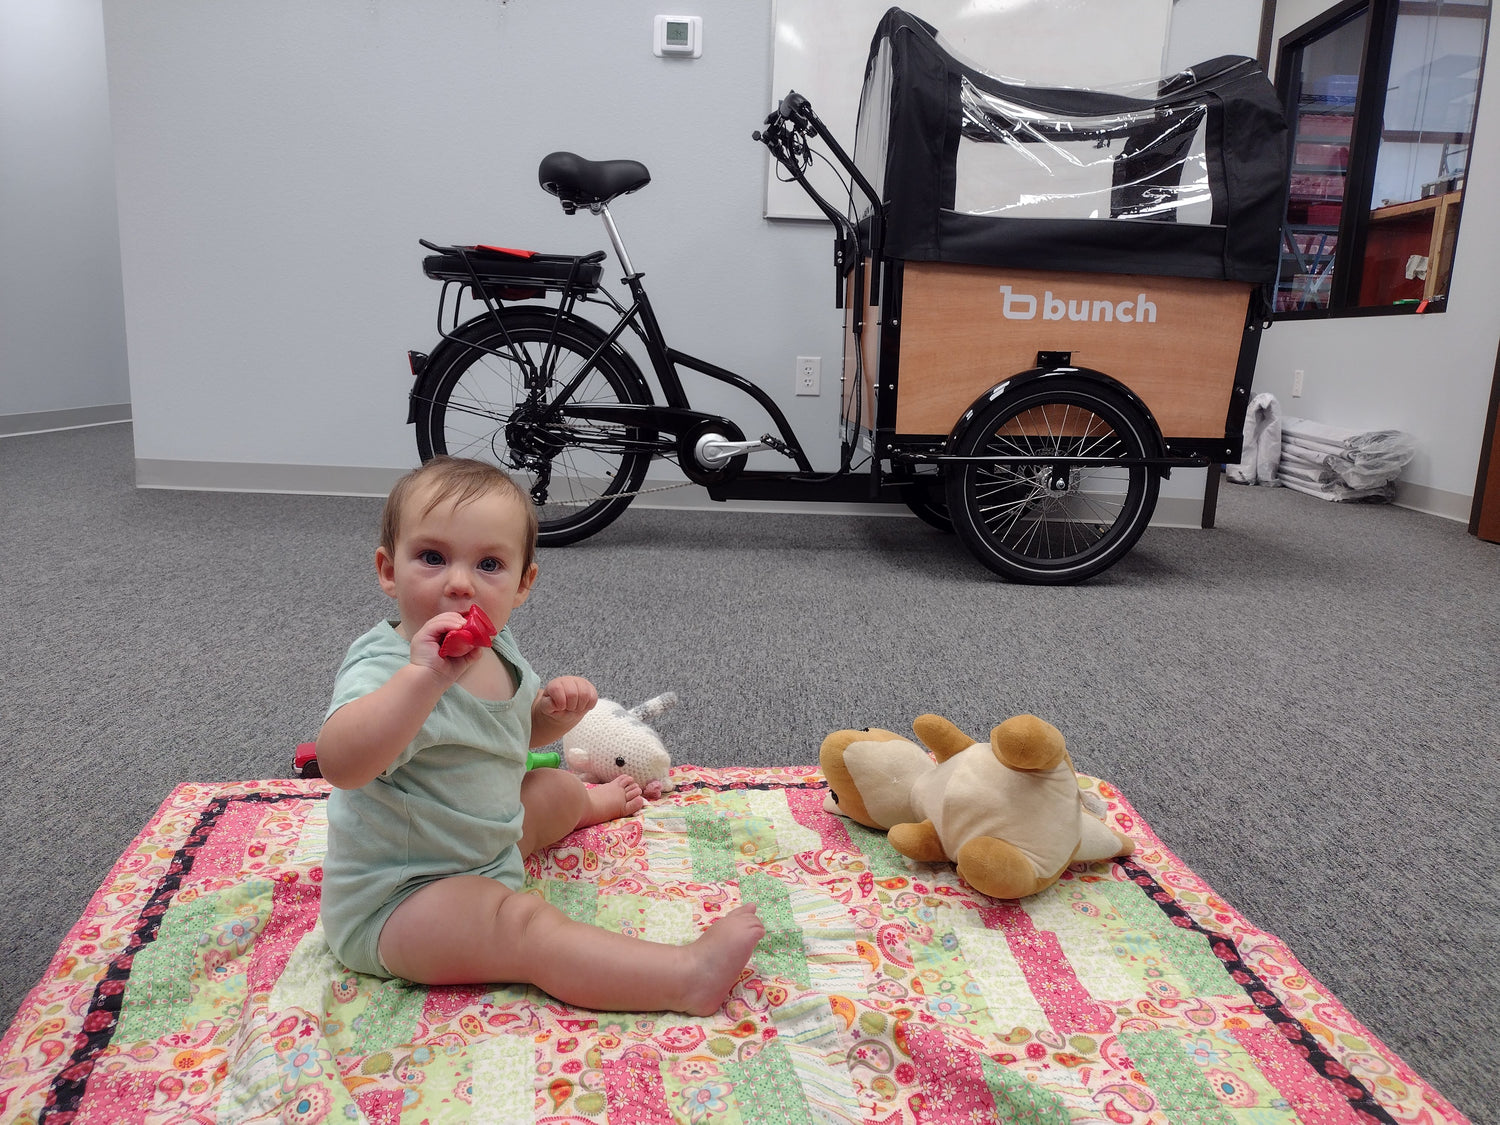 Baby on blanket near bunch bike in Denton headquarters